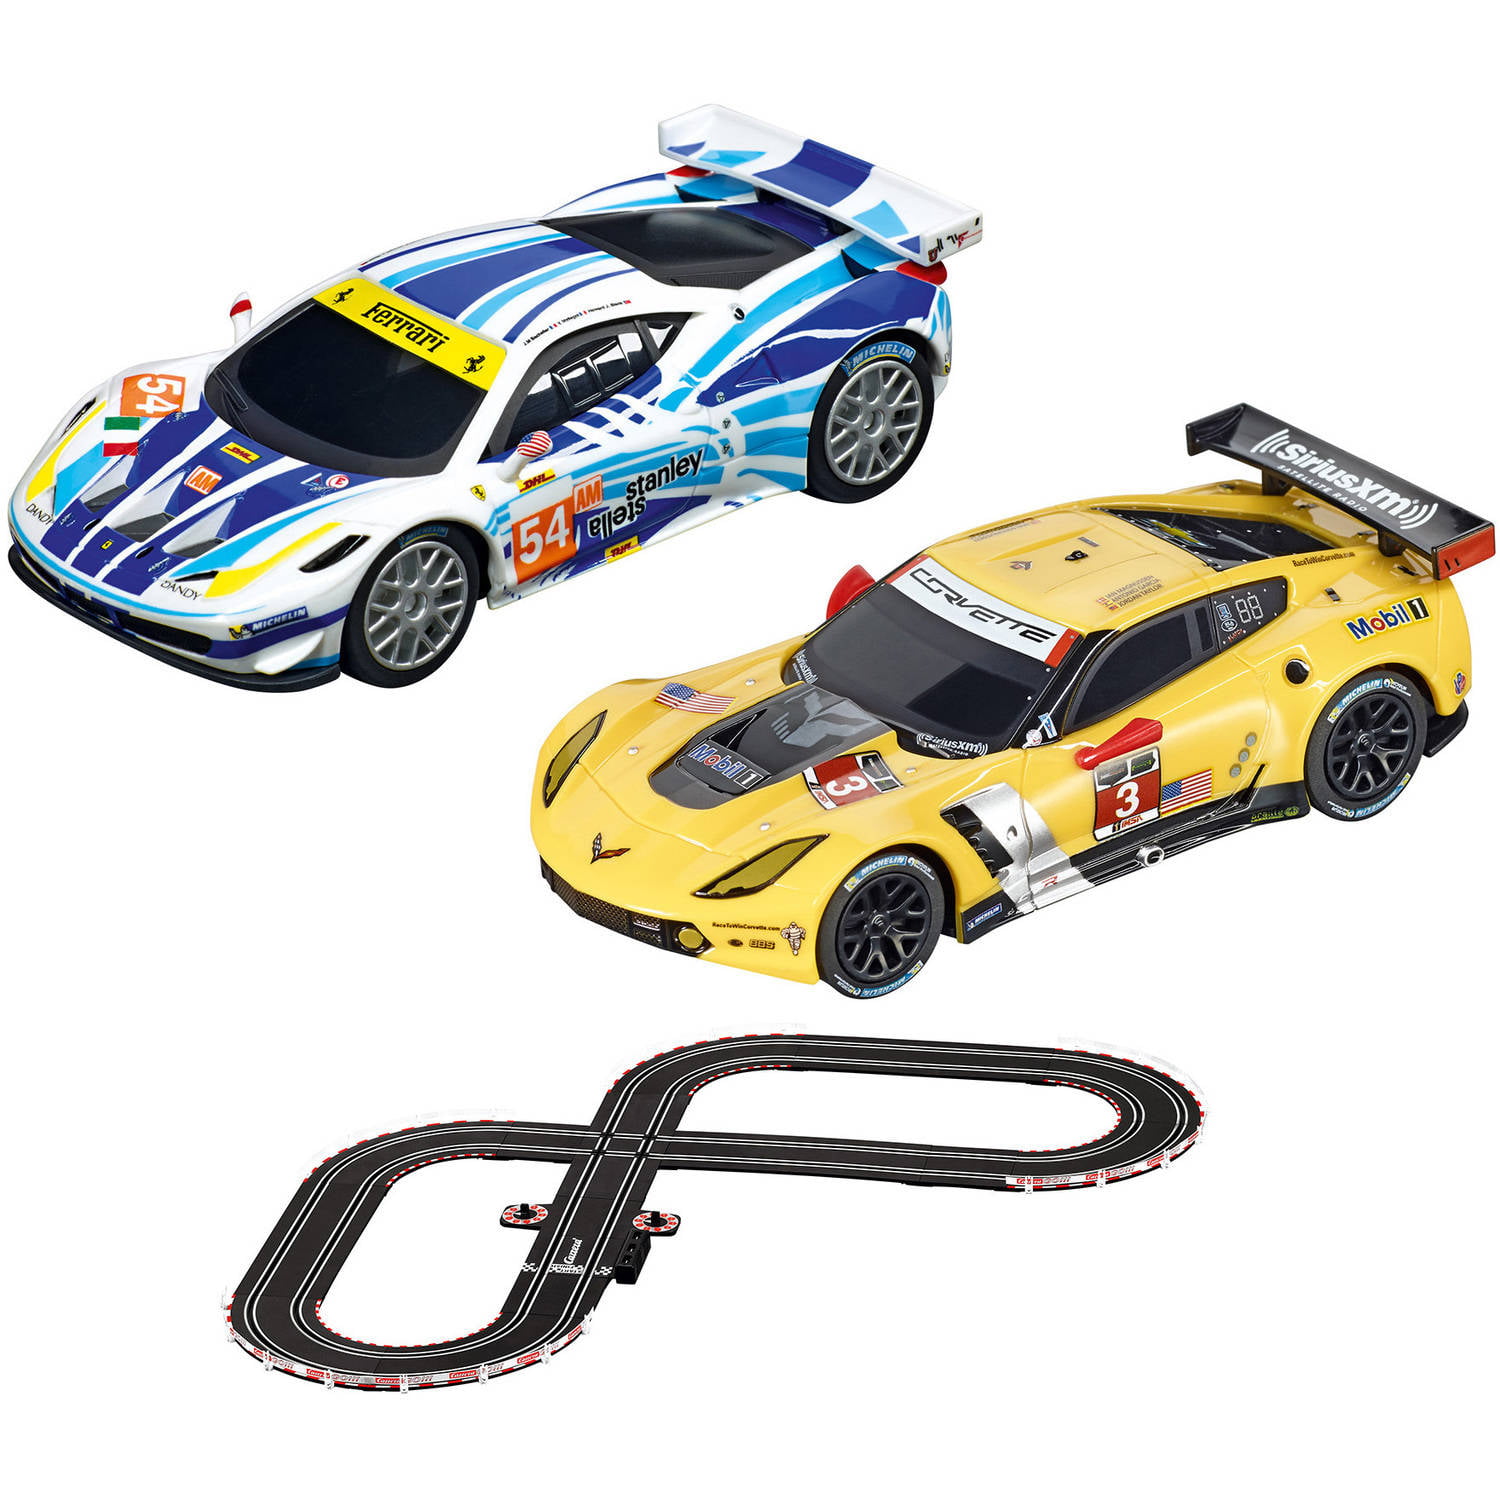 Slot Car Toy Race Track Sets Stuart 1:43 Scale Analog Slot Car Racing Vehicle for Carrera GO!! Carrera 64167 Minions Character 